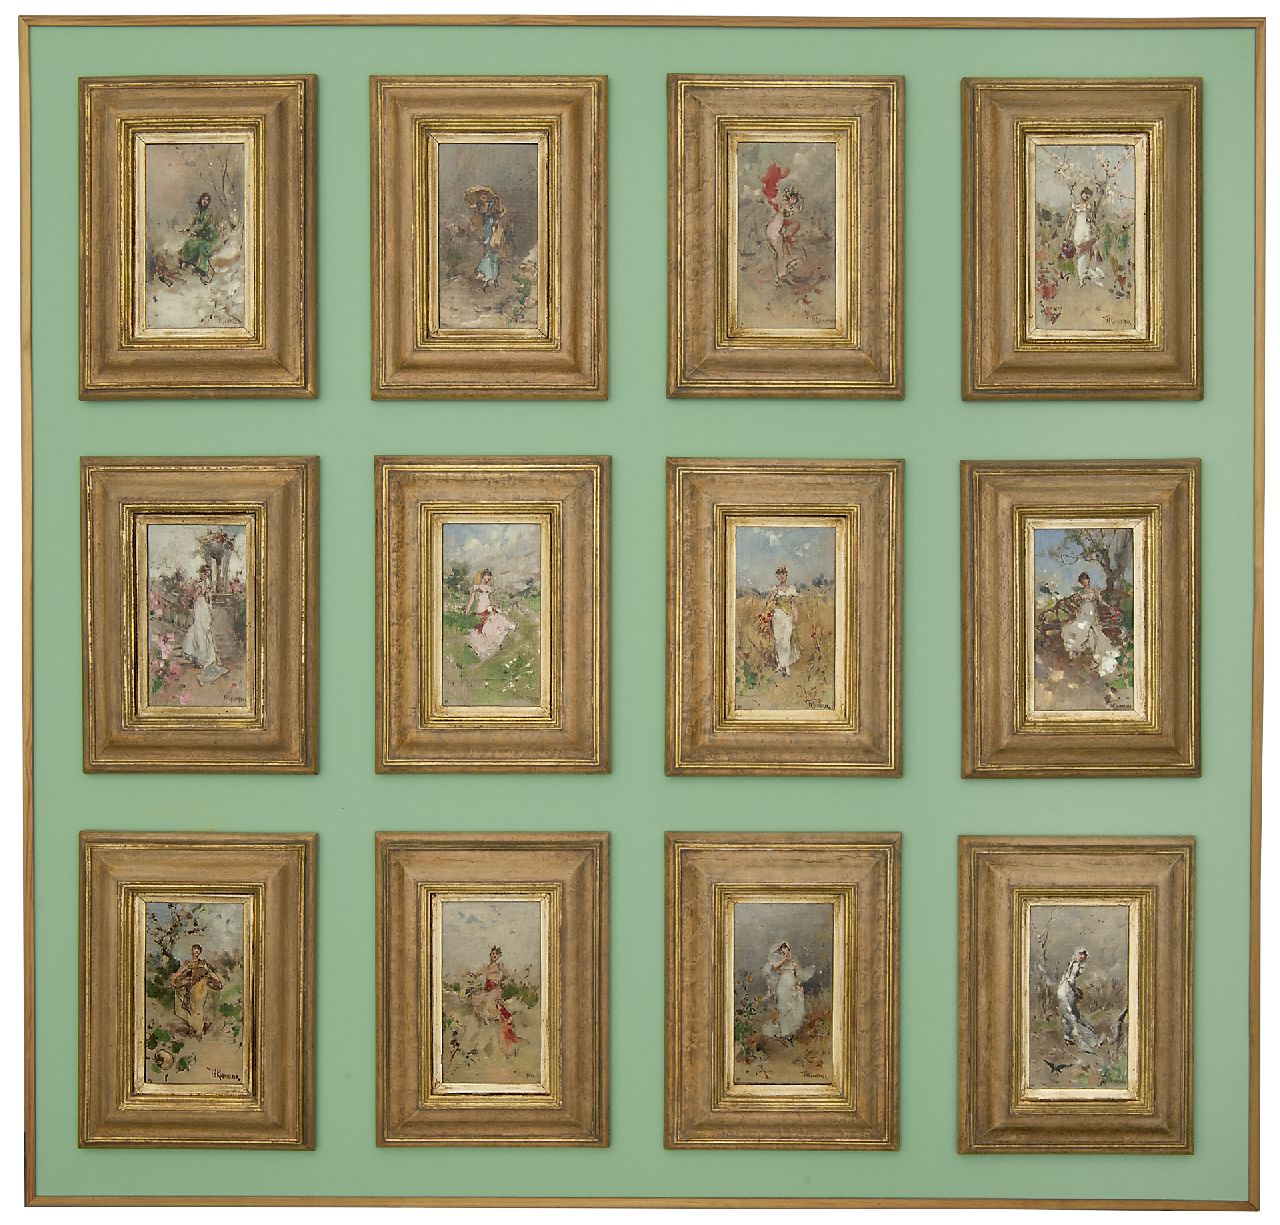 Kaemmerer F.H.  | Frederik Hendrik Kaemmerer | Paintings offered for sale | January - Zodiac sign Capricorn, oil on canvas laid down on painter's board 18.5 x 10.3 cm, signed l.r.